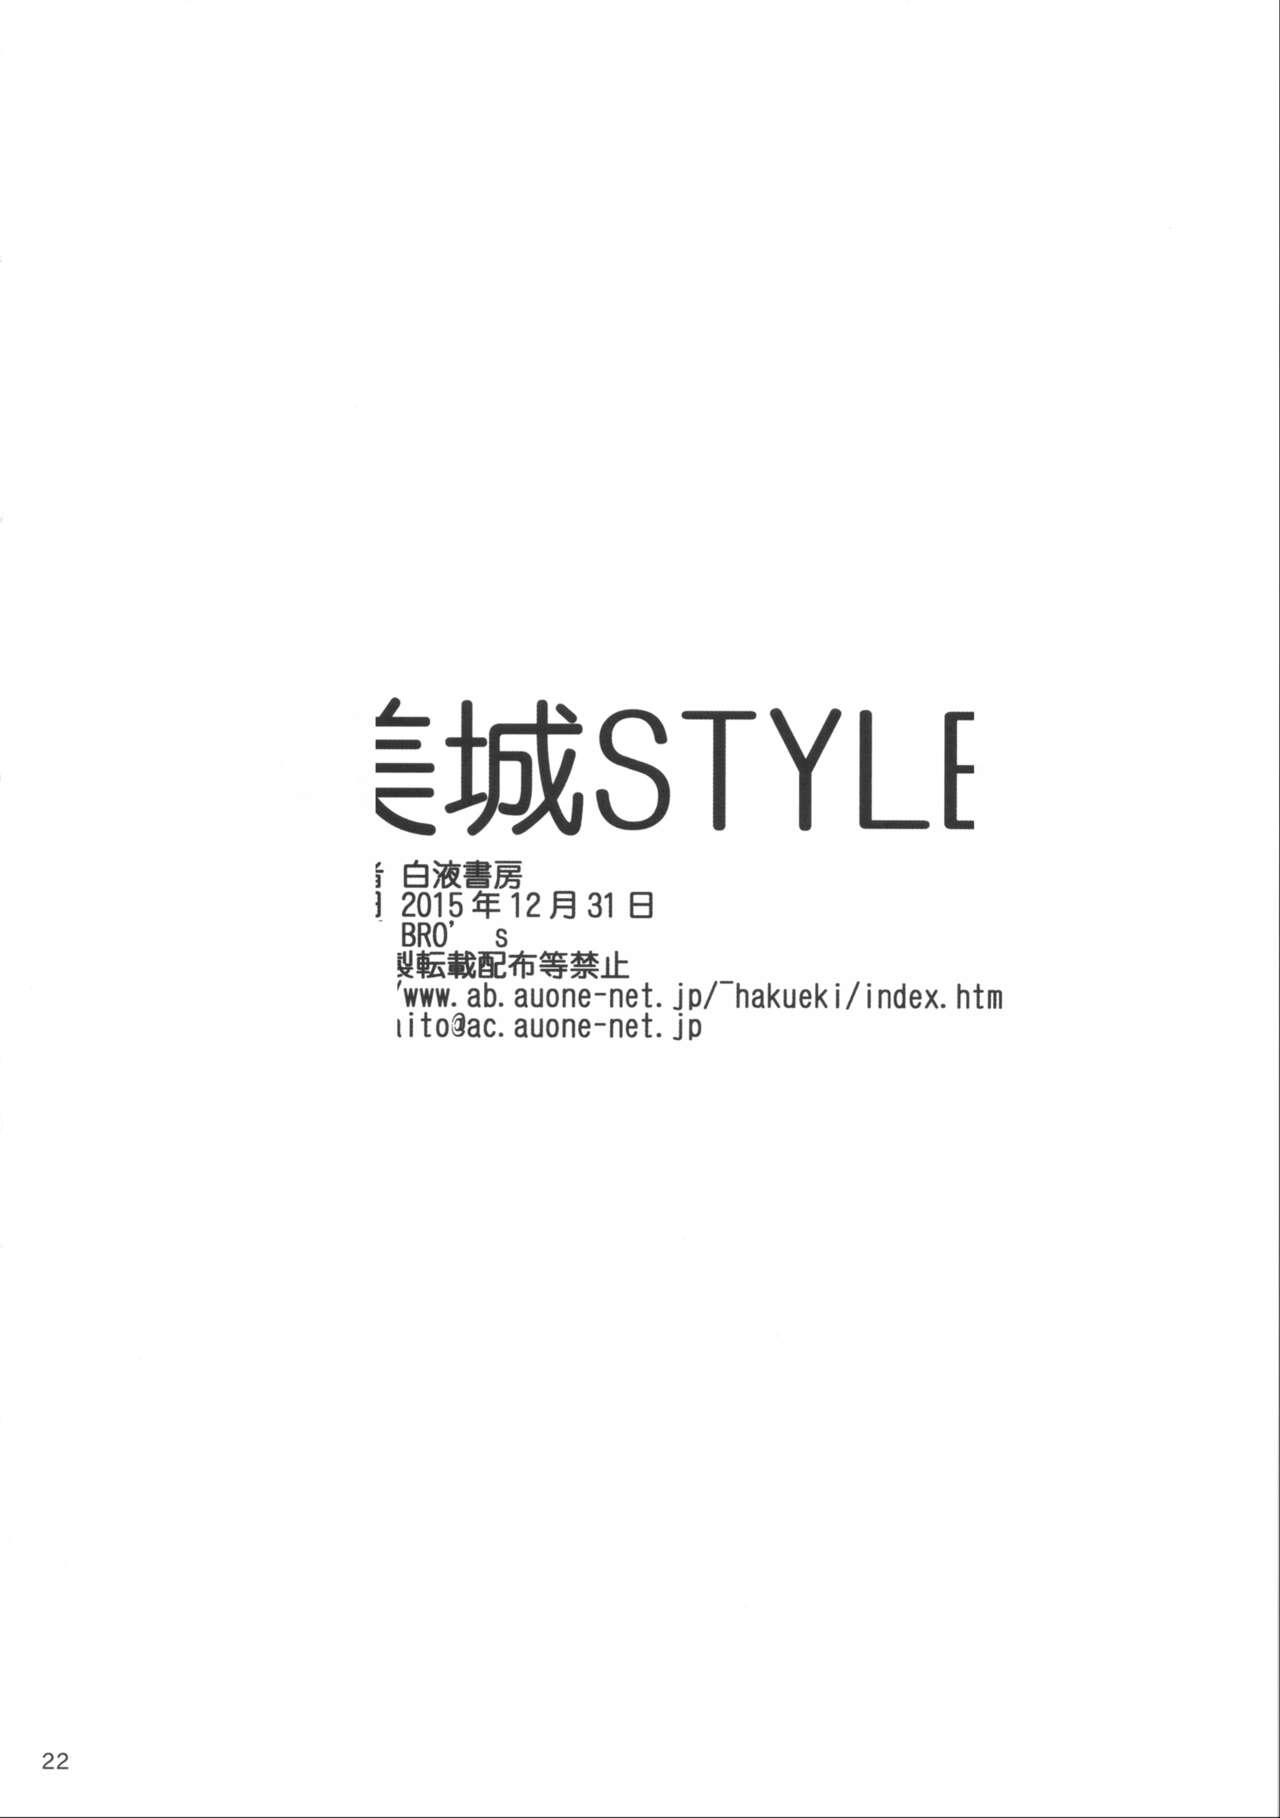 Mishiro STYLE 20